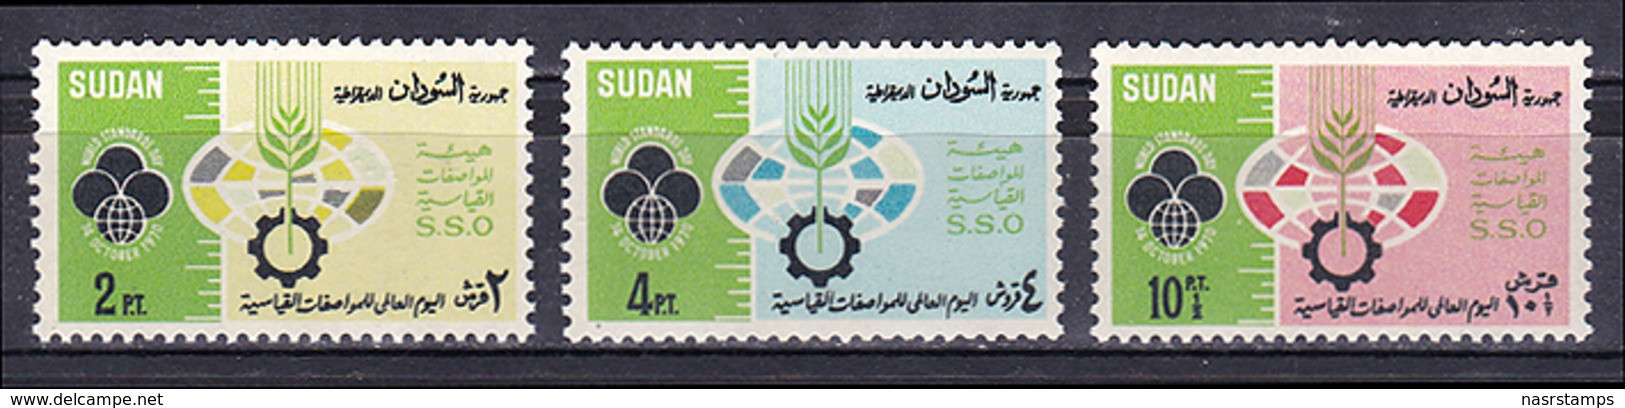 Sudan - 1972 - ( World Standards Day, Oct. 14, 1970 ) - Complete Set - MNH (**) - Sudan (1954-...)